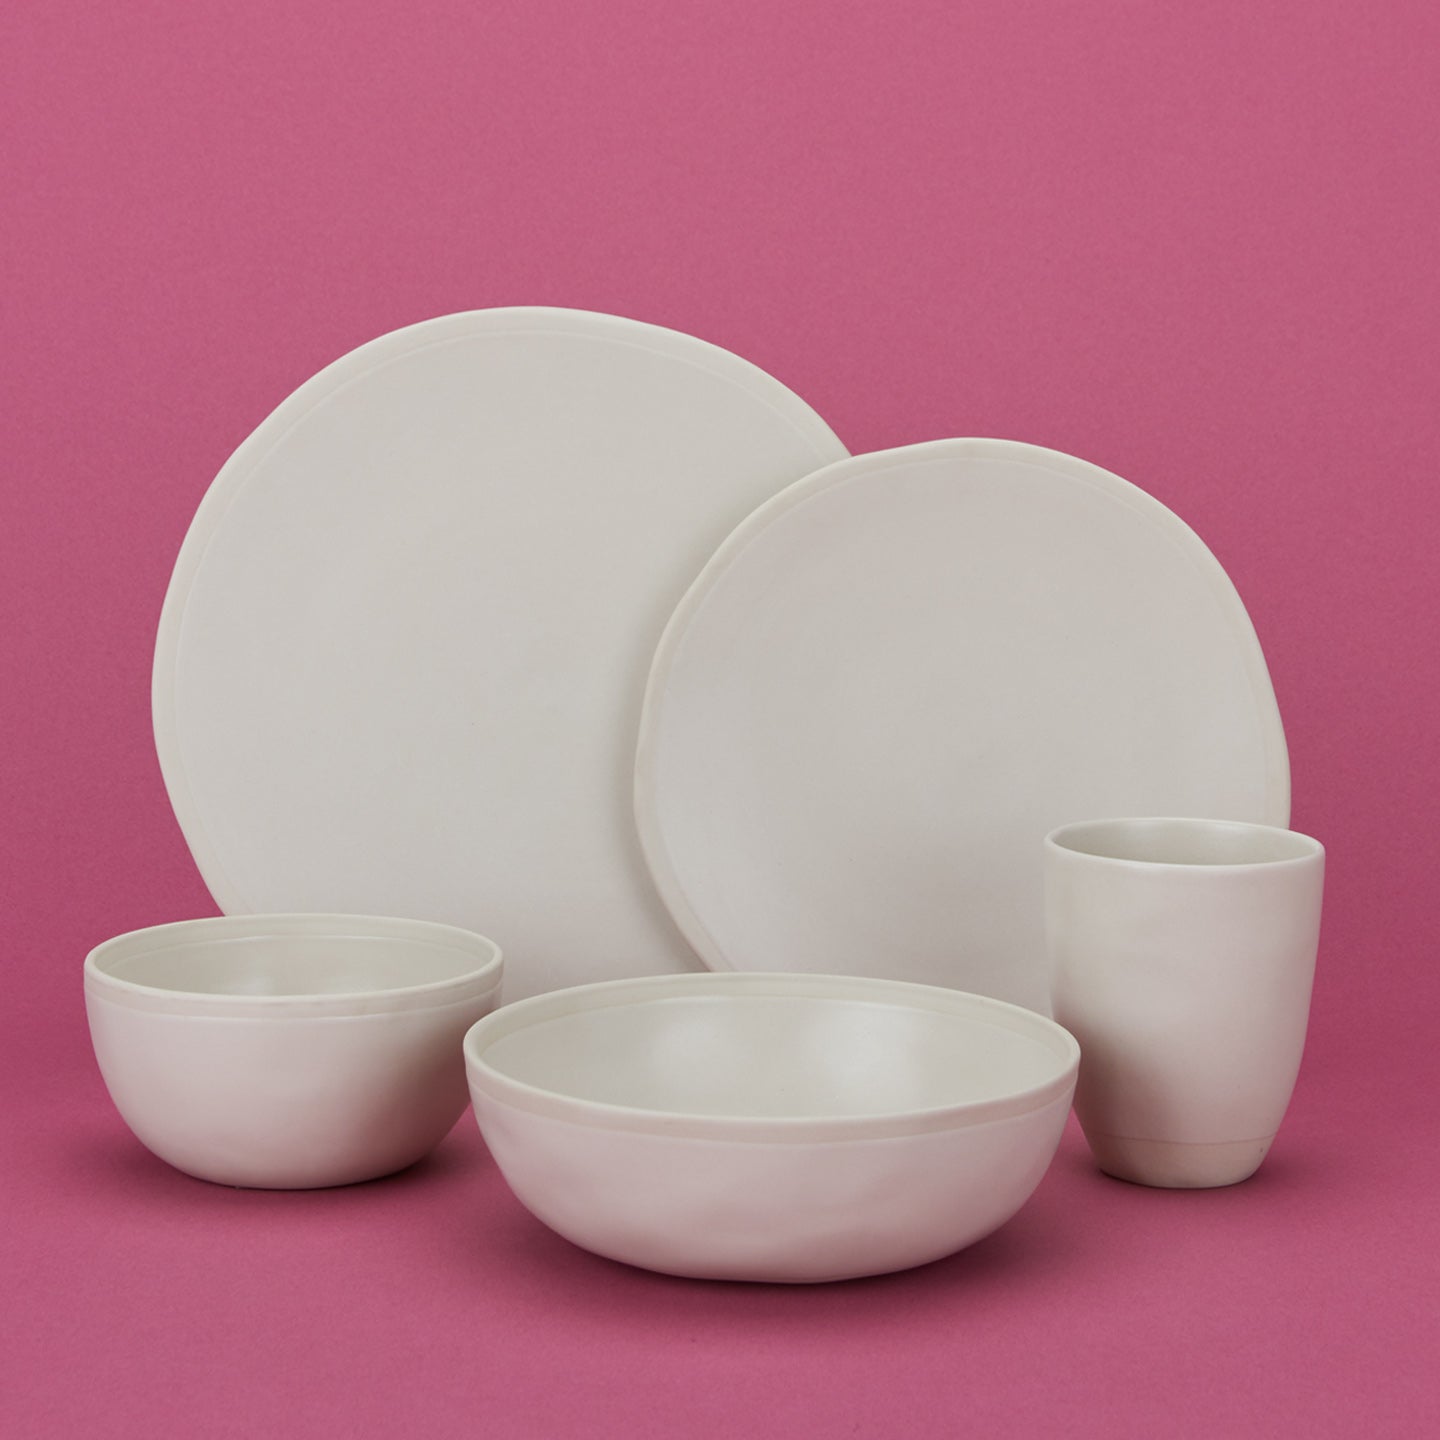 Group of Atelier Dinnerware including small bowl, medium bowl, salad plate, dinner plate and mug.